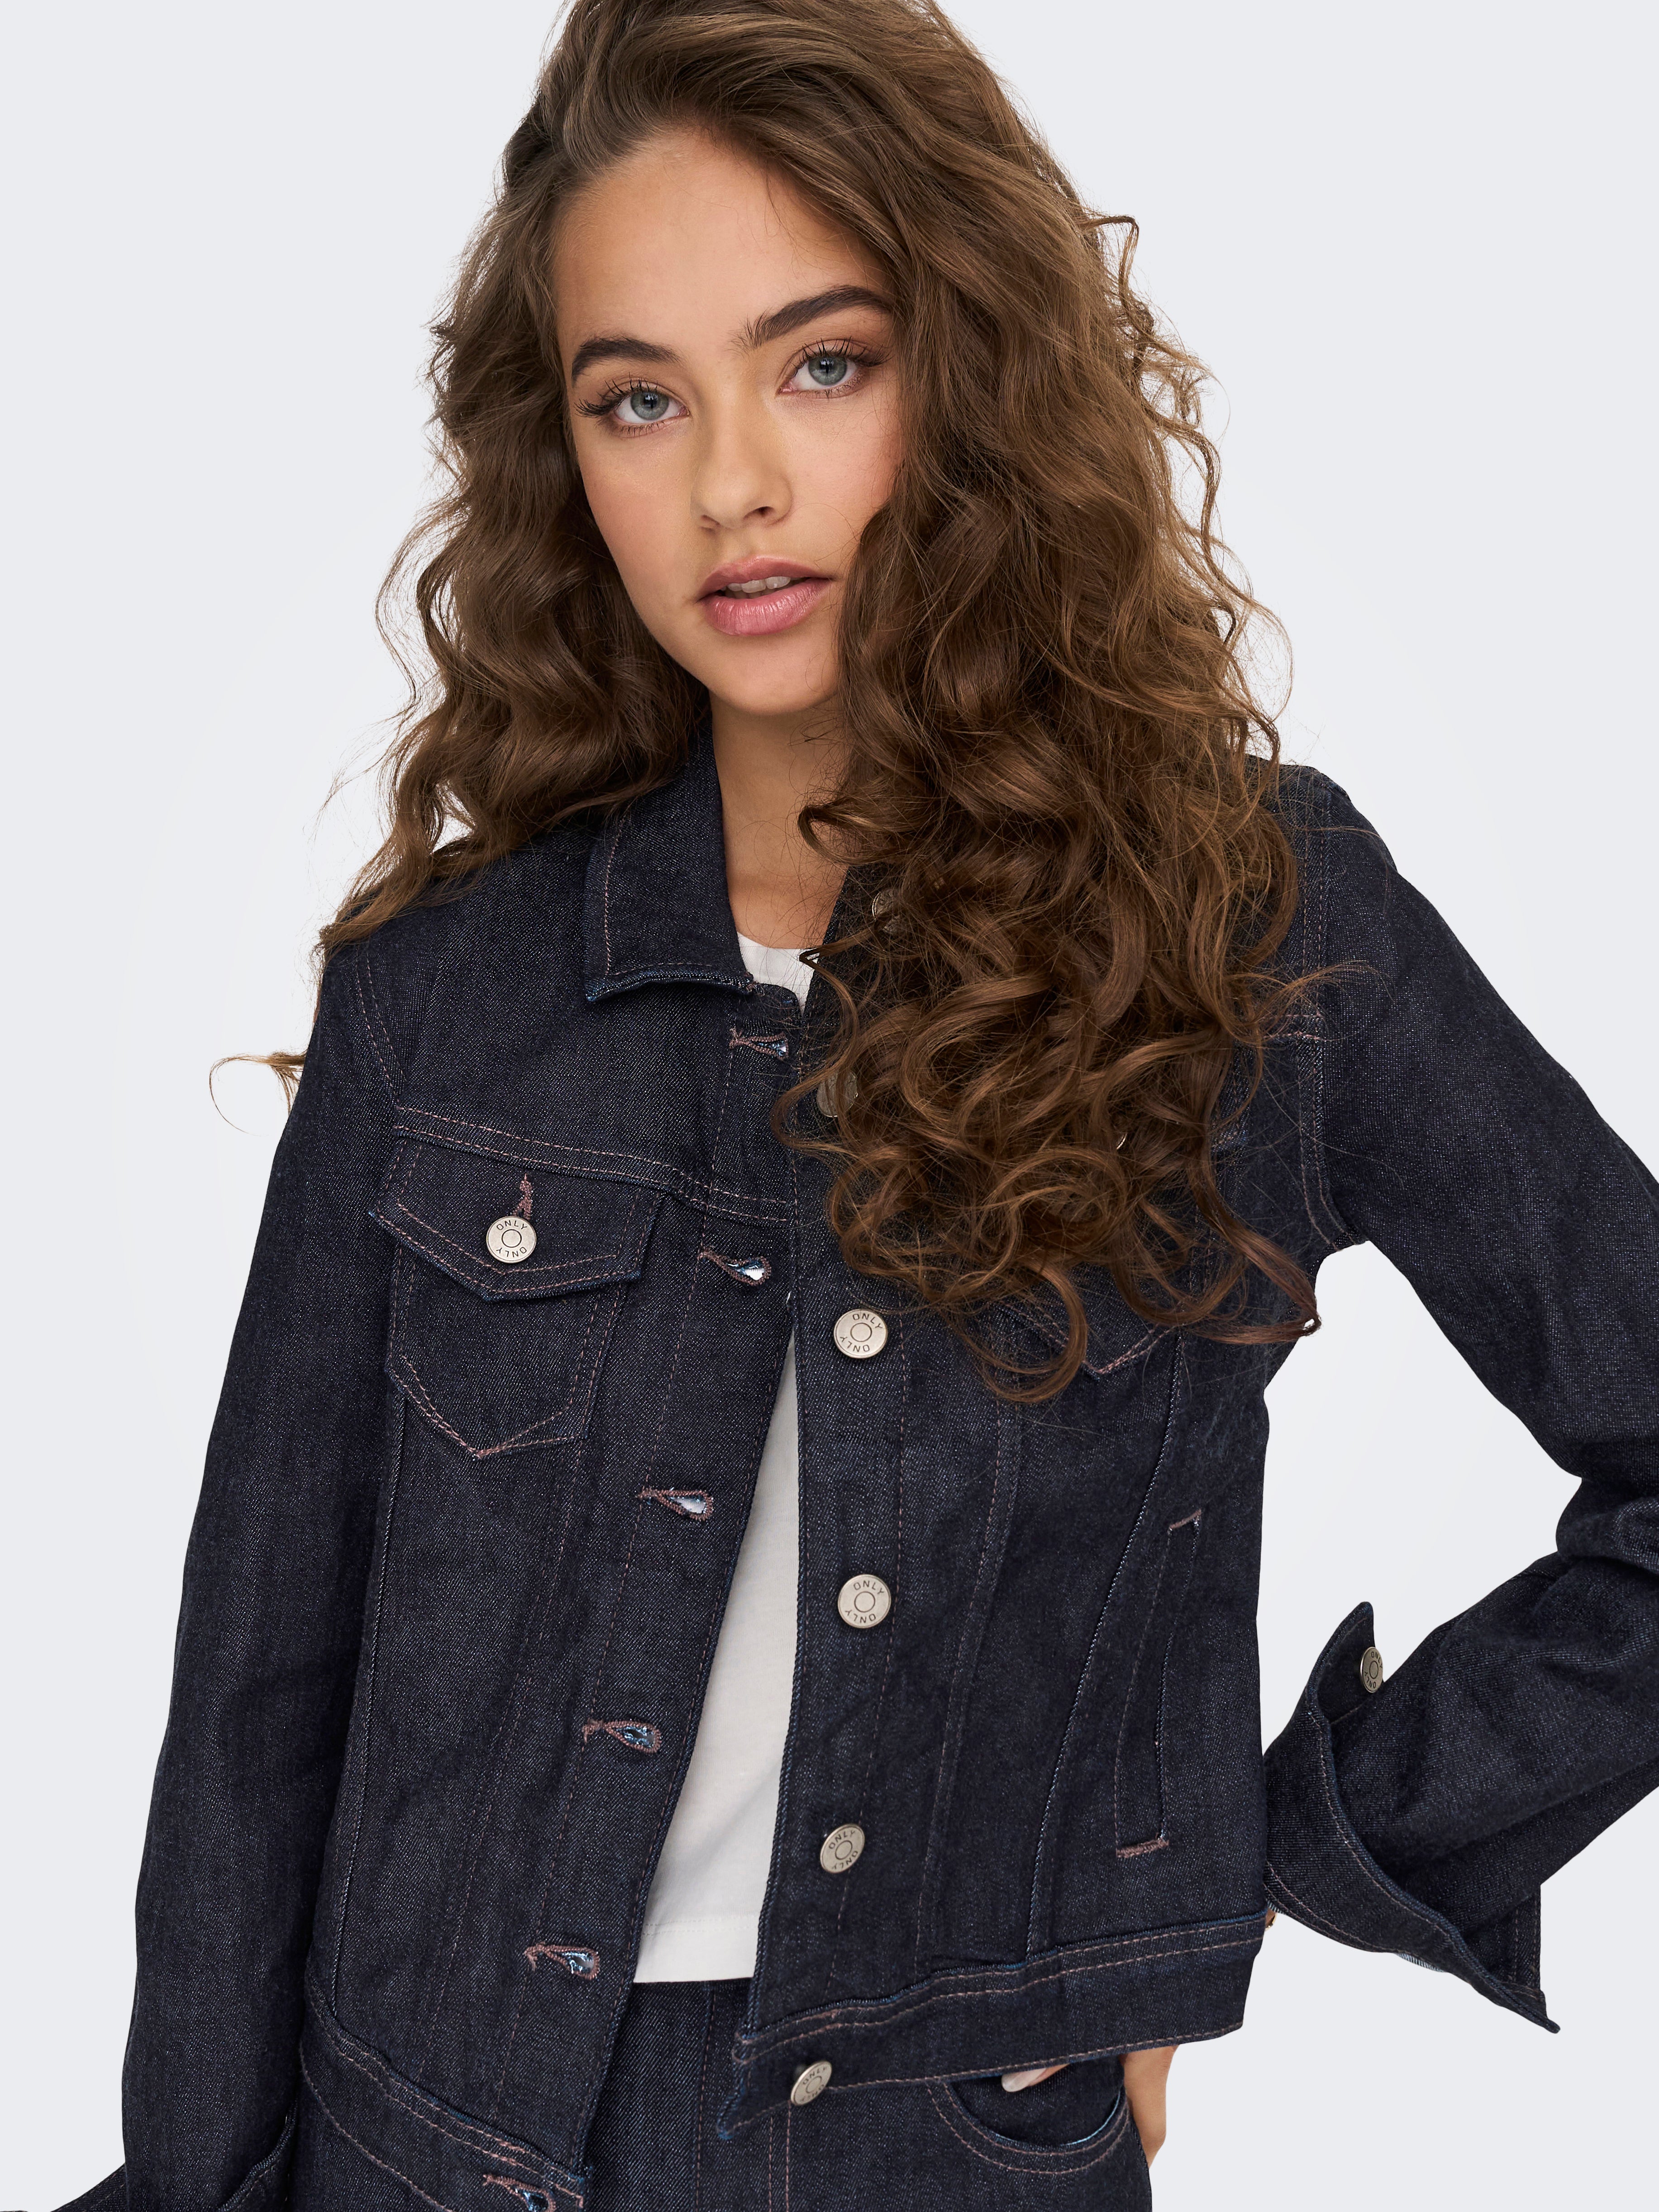 LEI Girls Jean Jacket Size S Dark Wash Blue Denim Short Long Sleeve | eBay